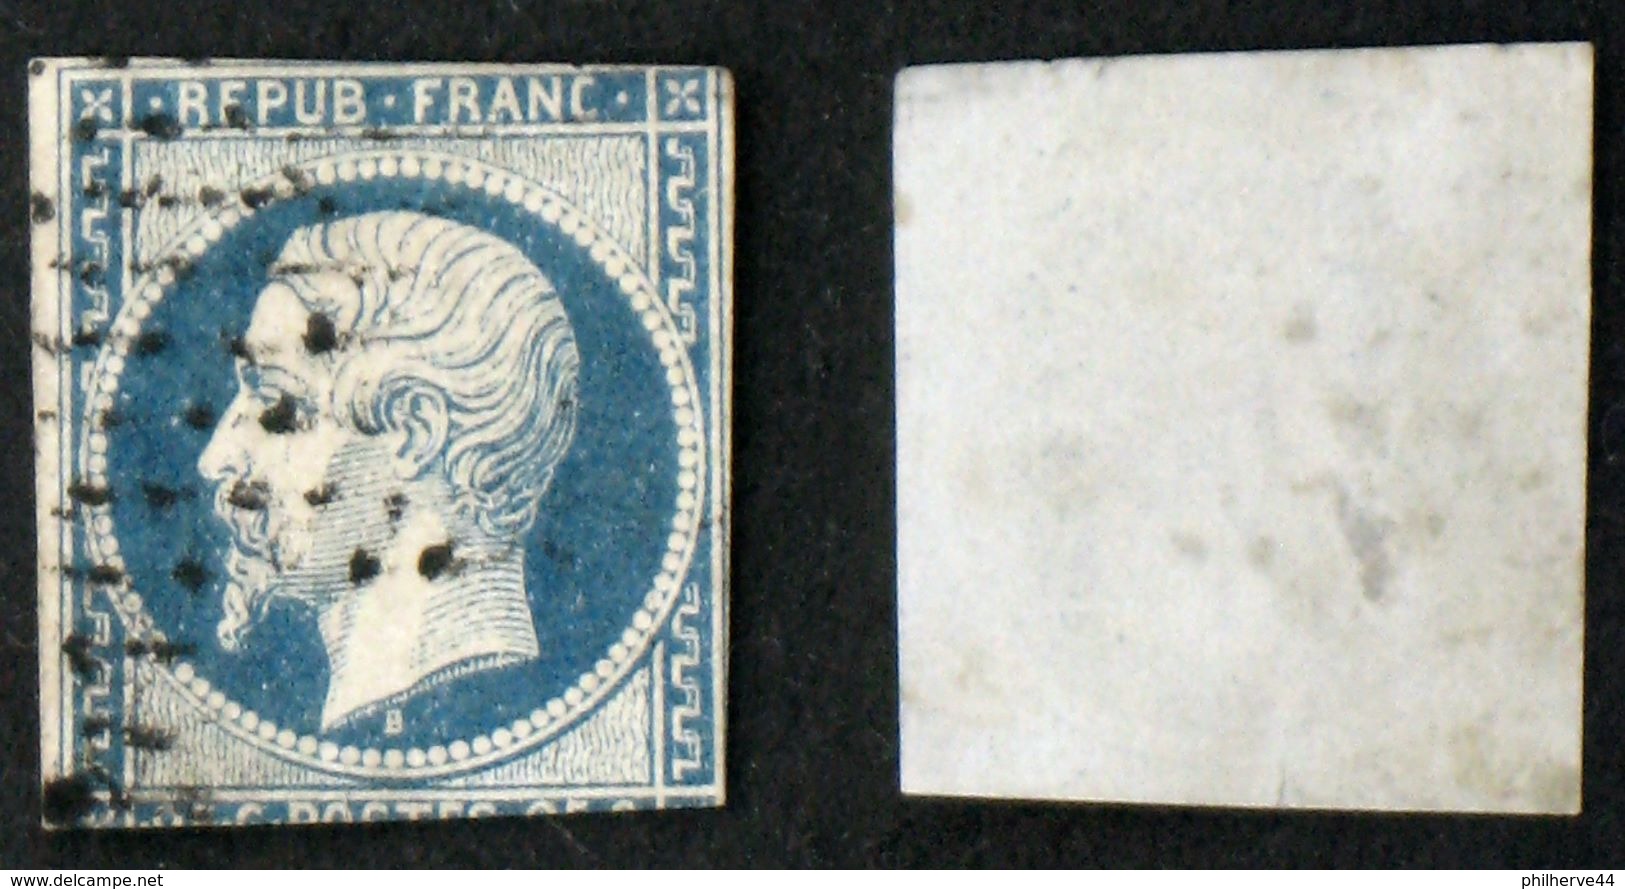 N° 10 25c NAPOLEON REPUB Déf. Cote 45€ - 1852 Louis-Napoleon